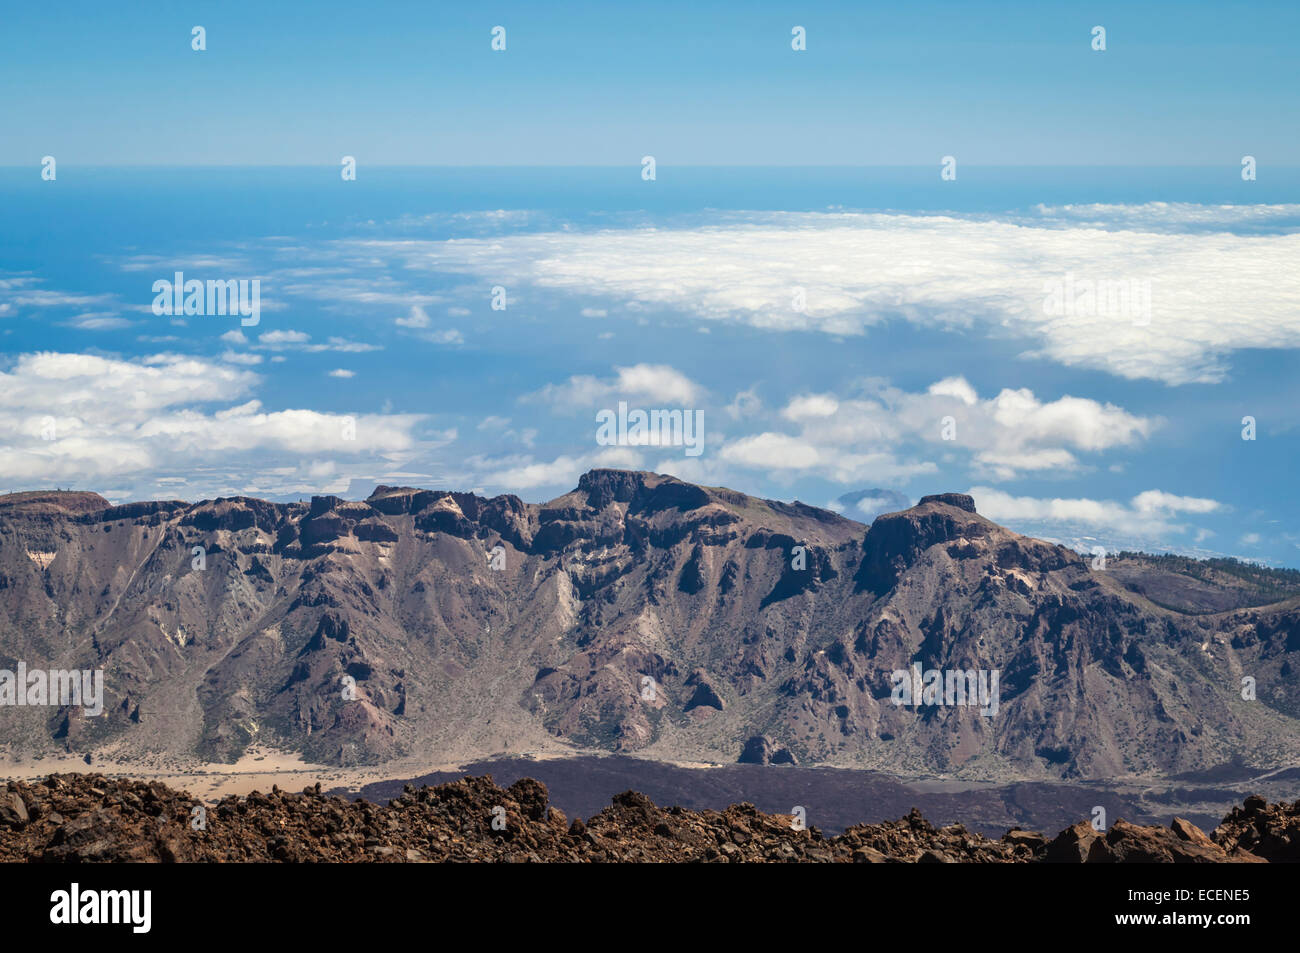 La fine del mondo. Vista fron vulcano Teide. Foto Stock